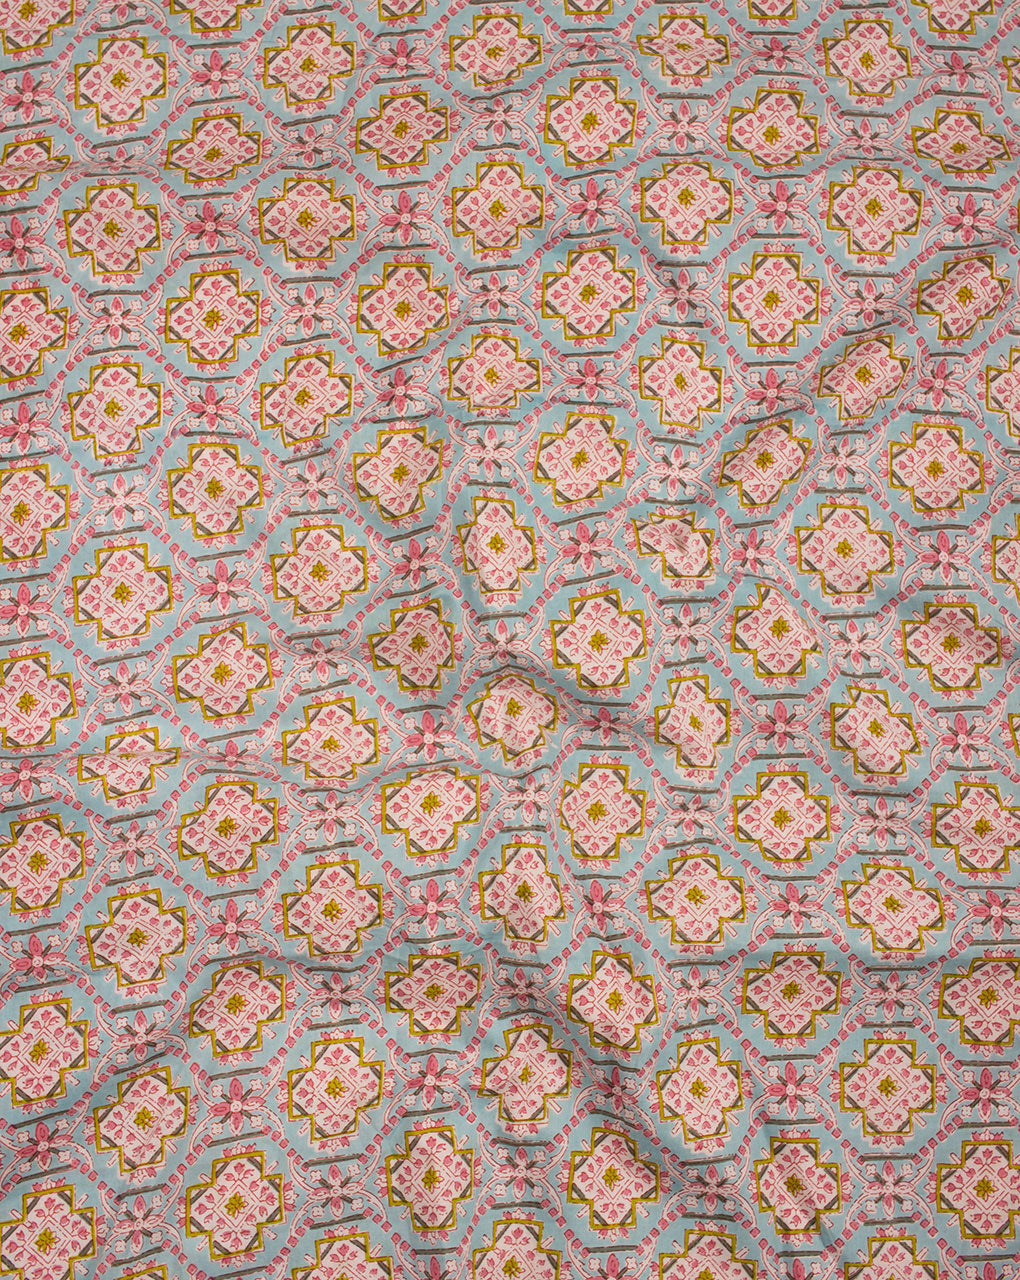 Trellis Screen Print Cotton Fabric - Fabriclore.com